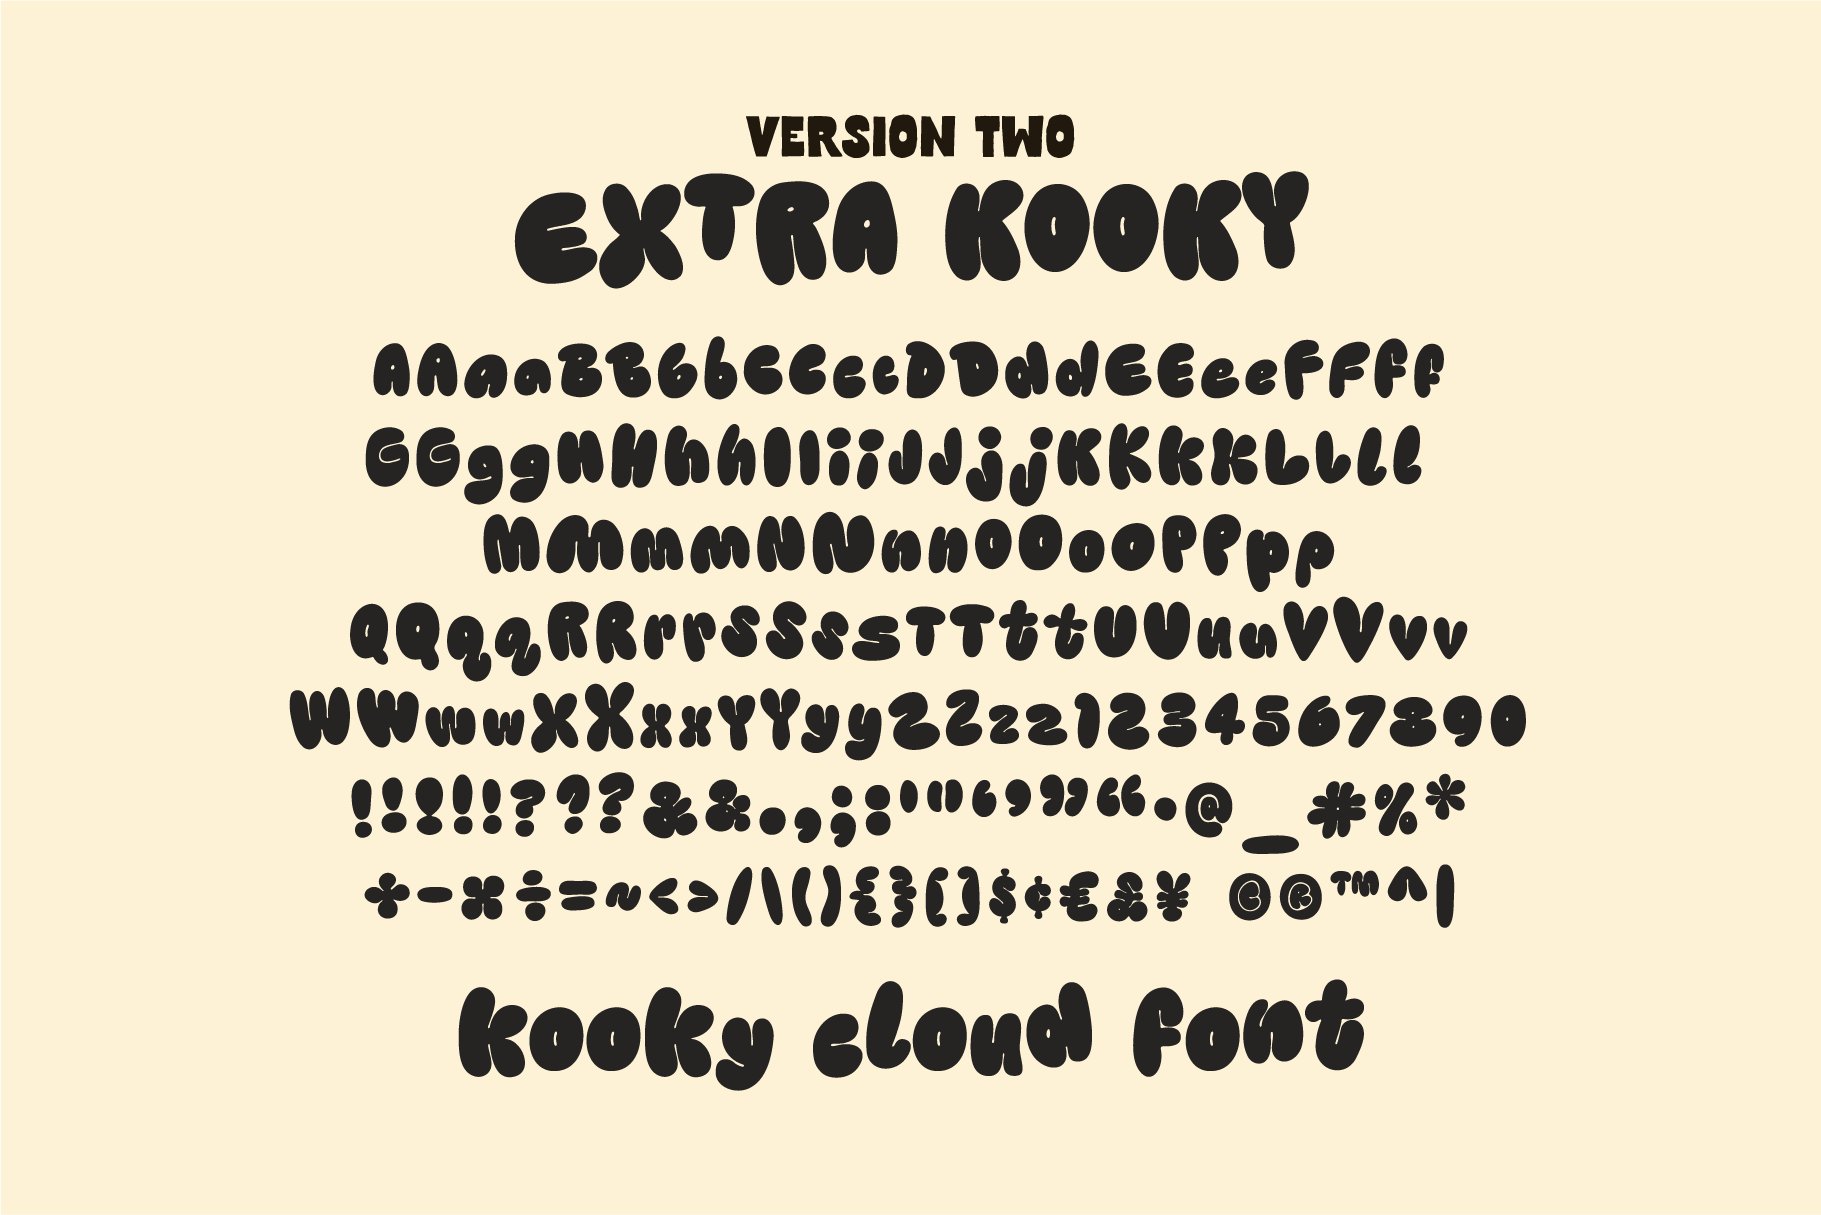 kooky cloud font 07 899